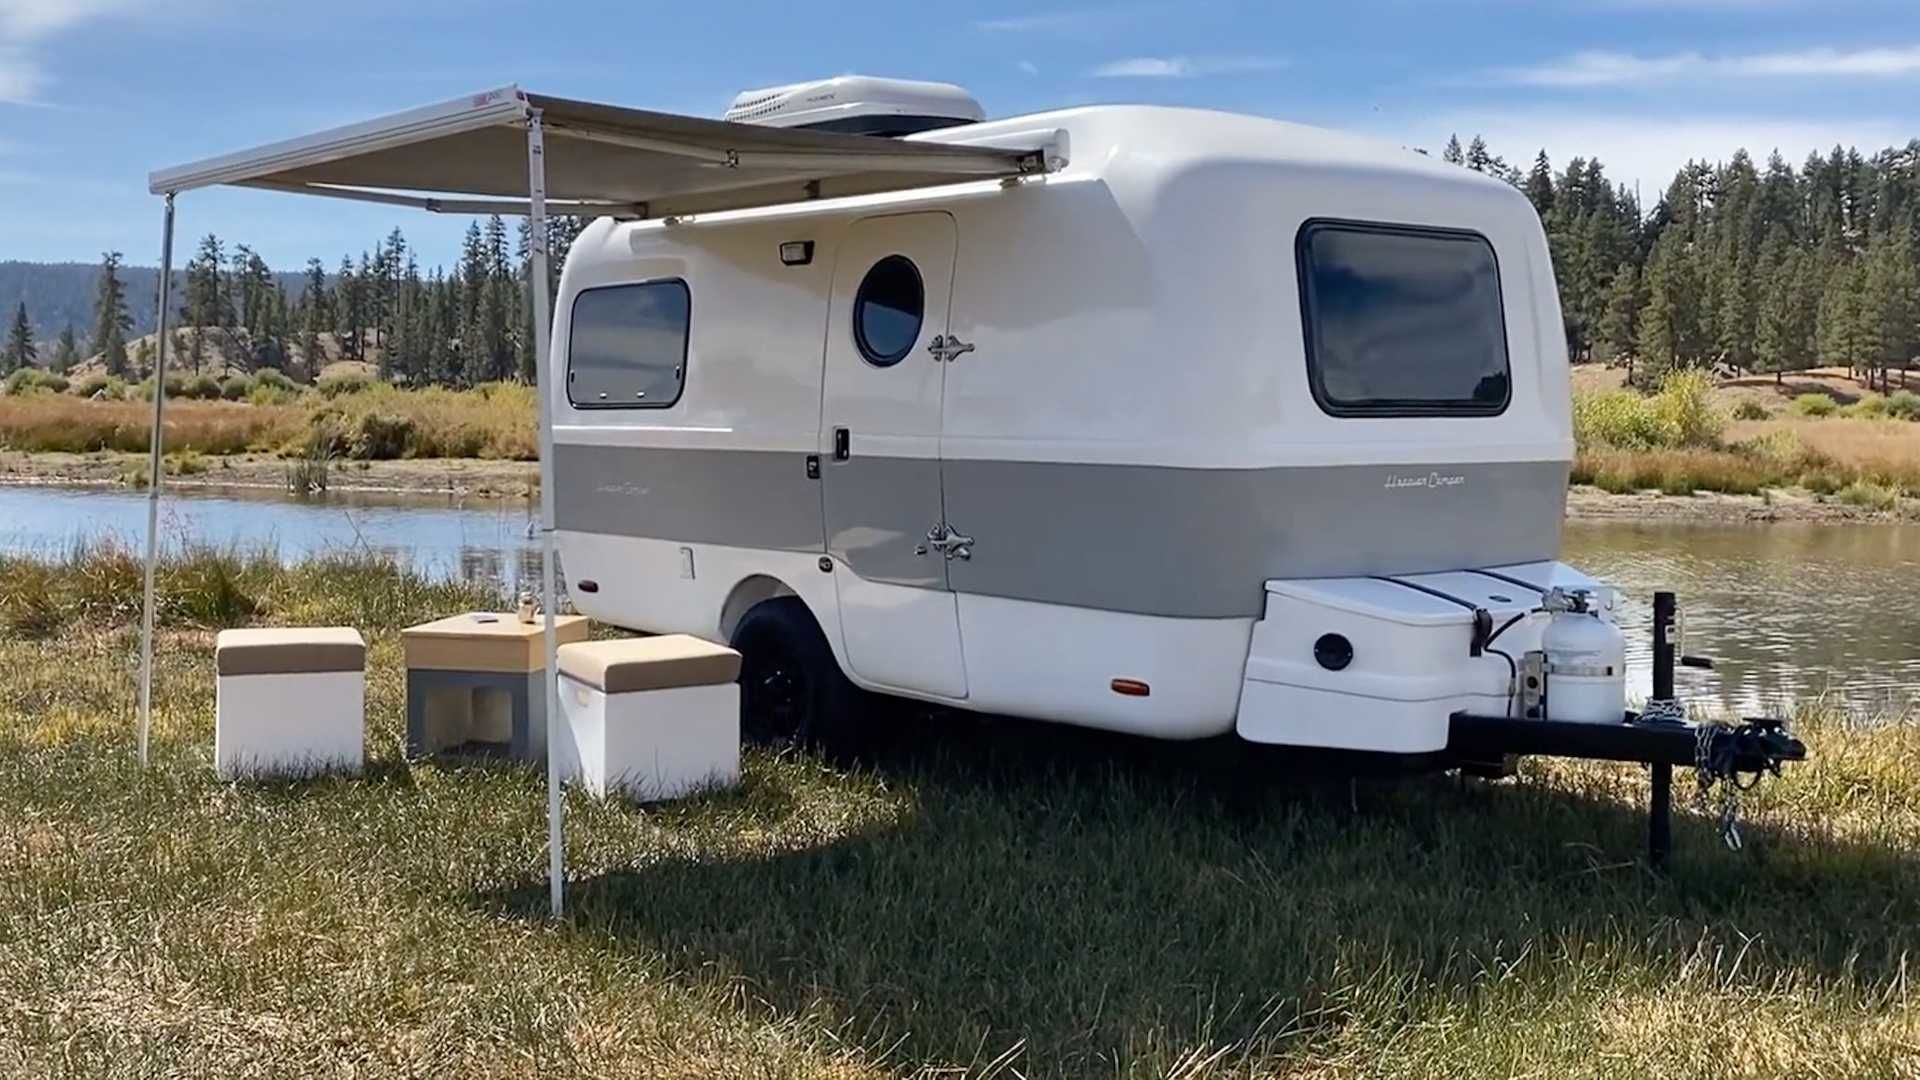 露營拖車的最新成員 Happier Camper 發表「Traveler」